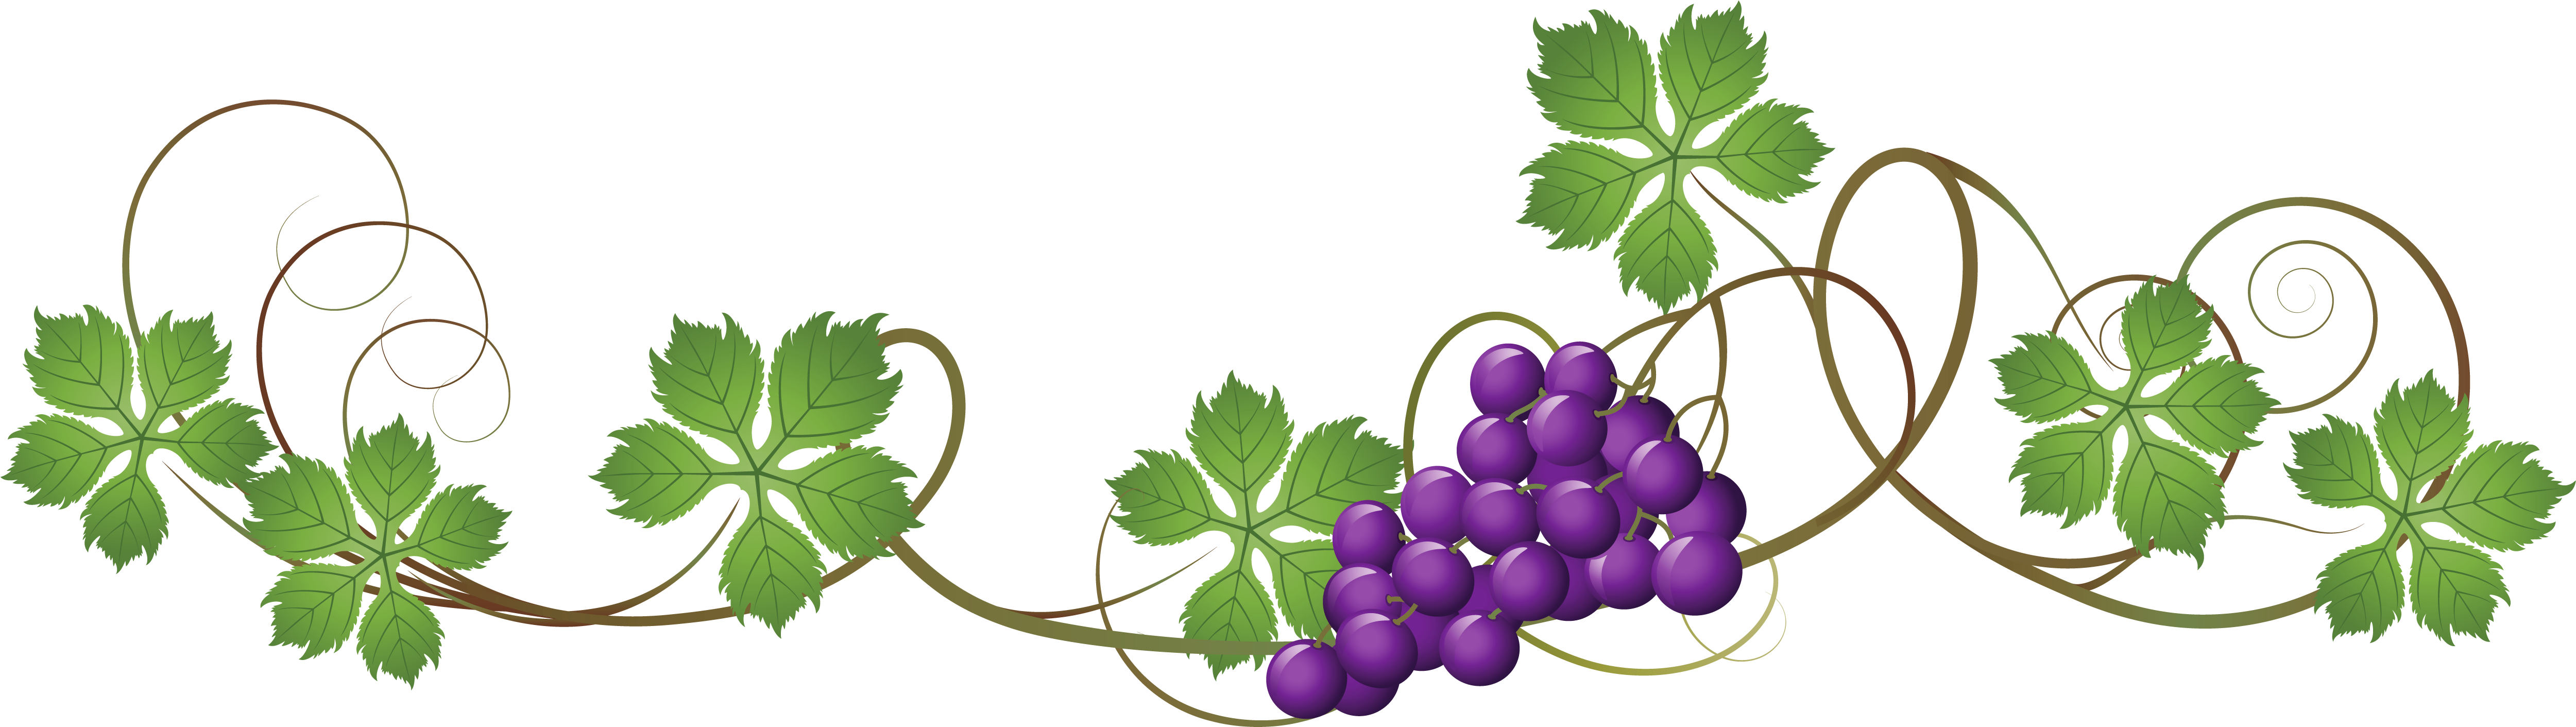 Vine - Grape Vine Border Png (5130x1608)